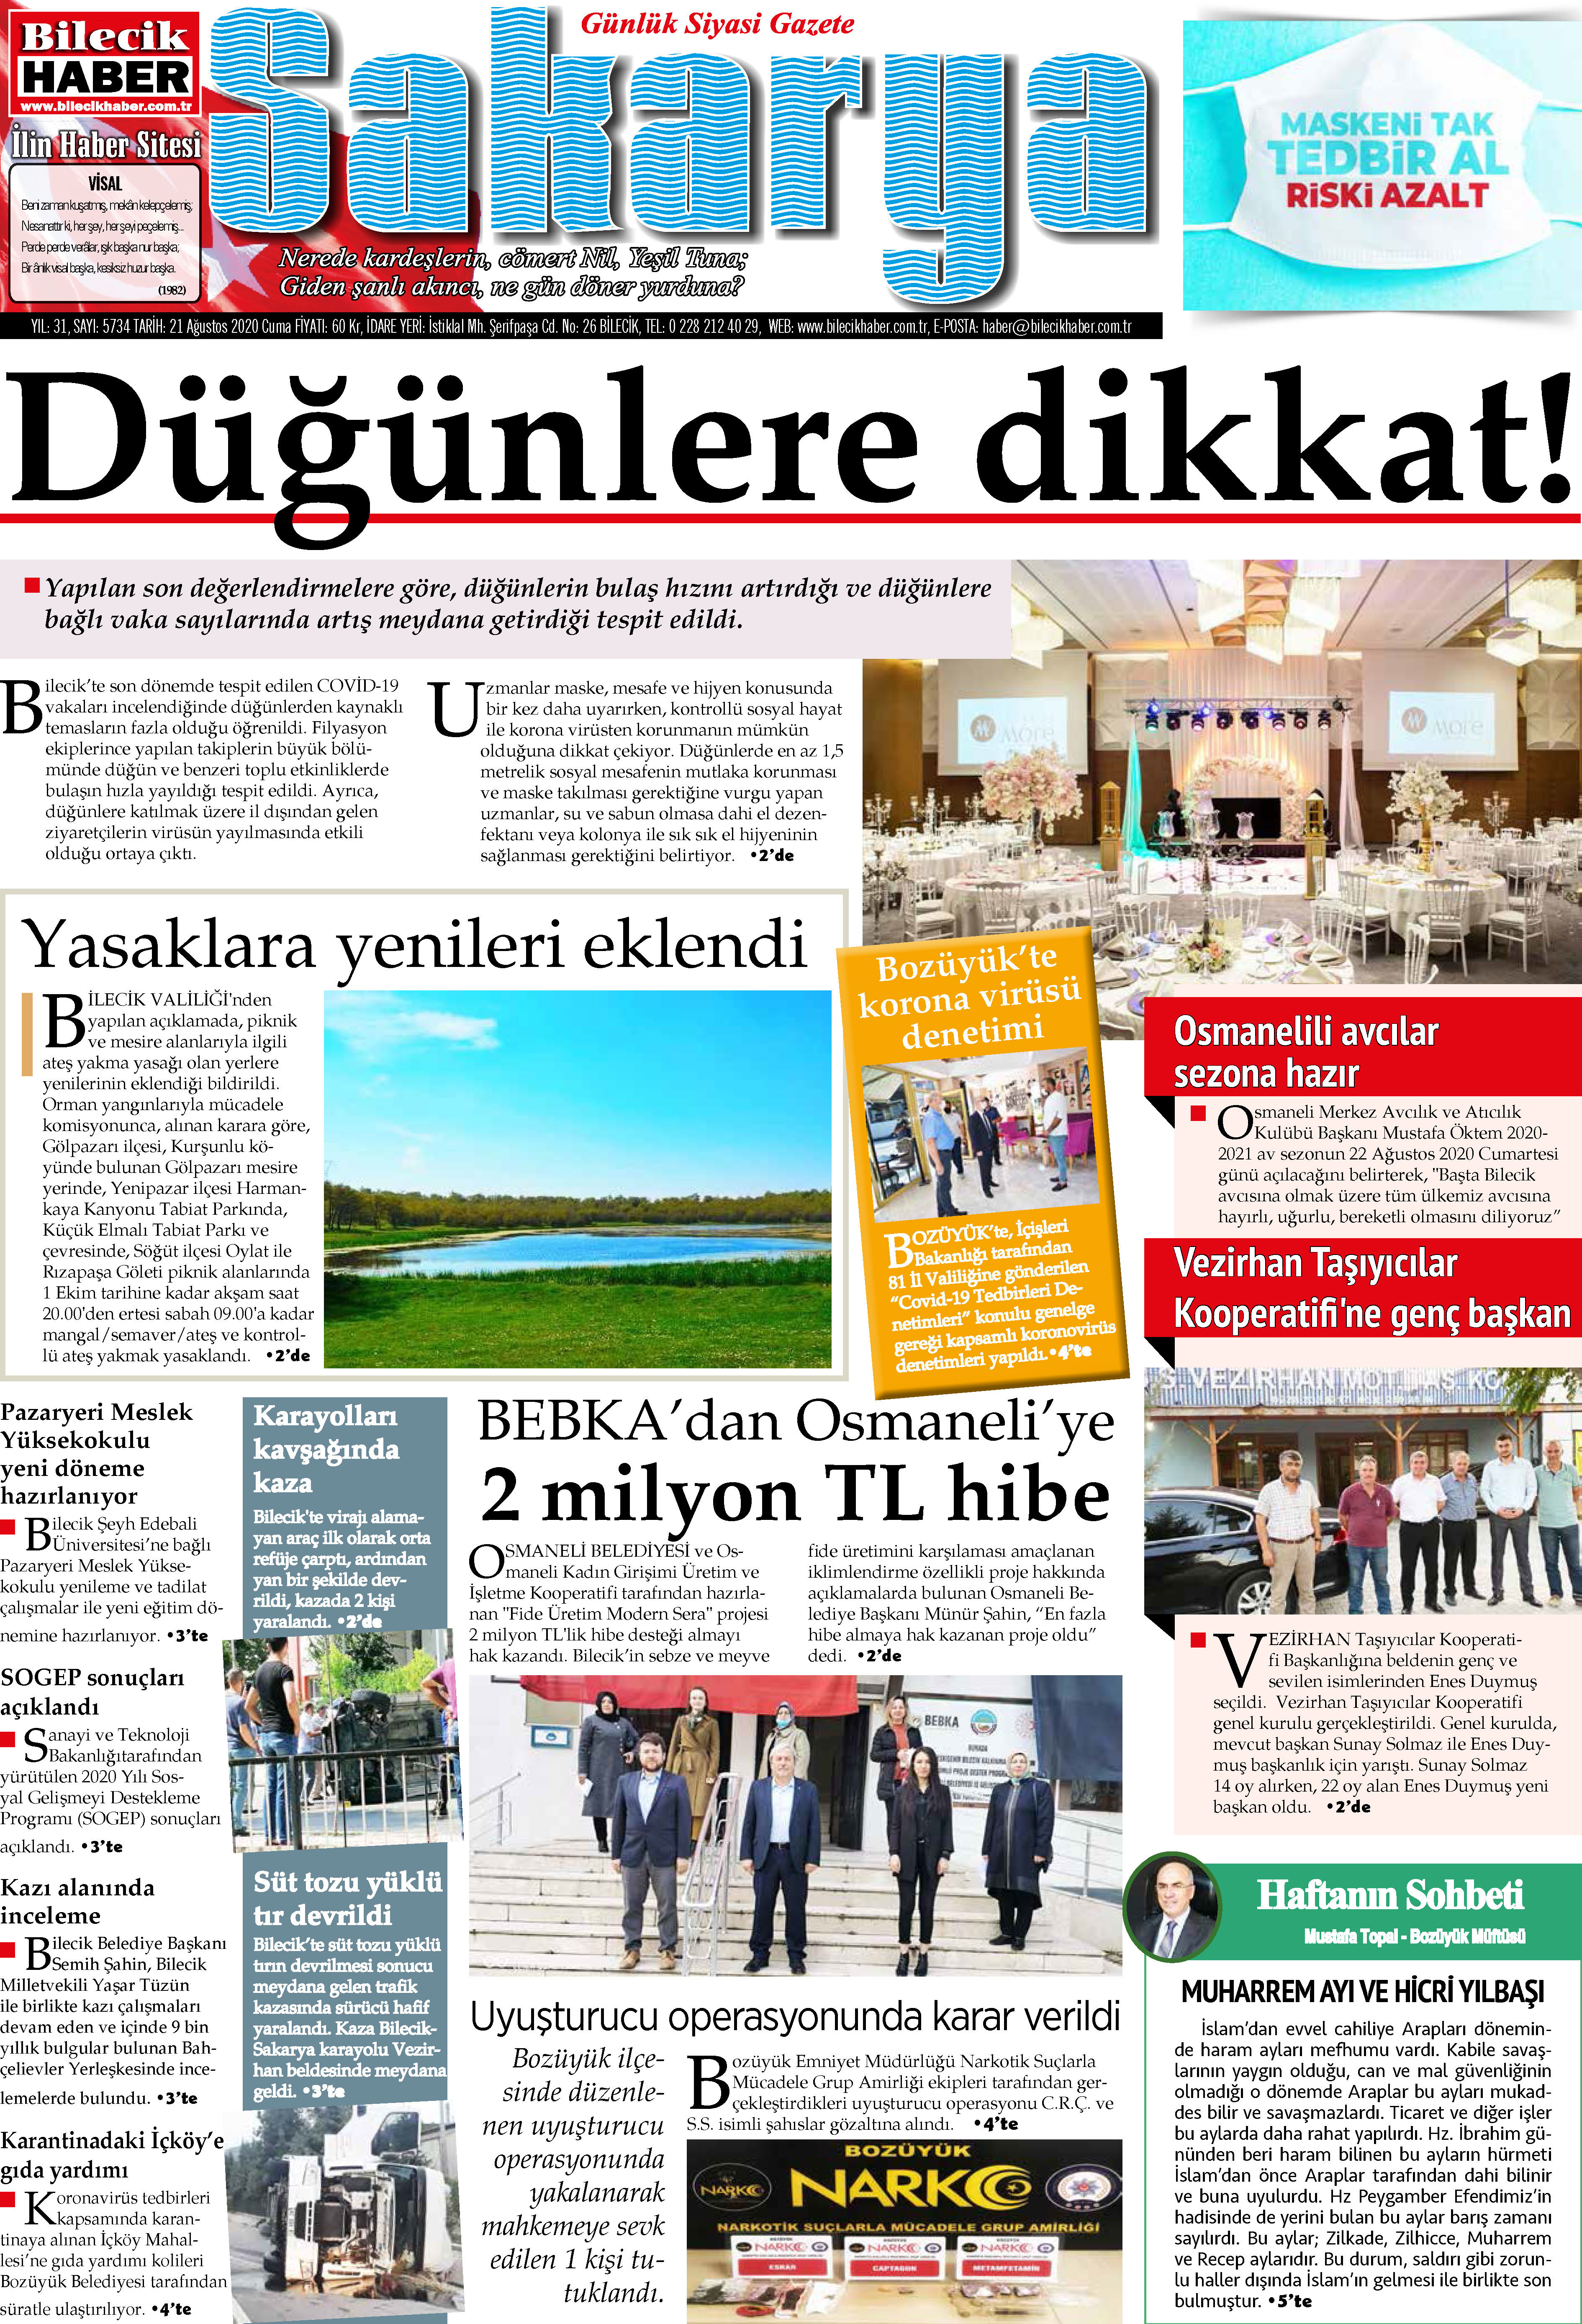 Sakarya Gazetesi Gazetesi